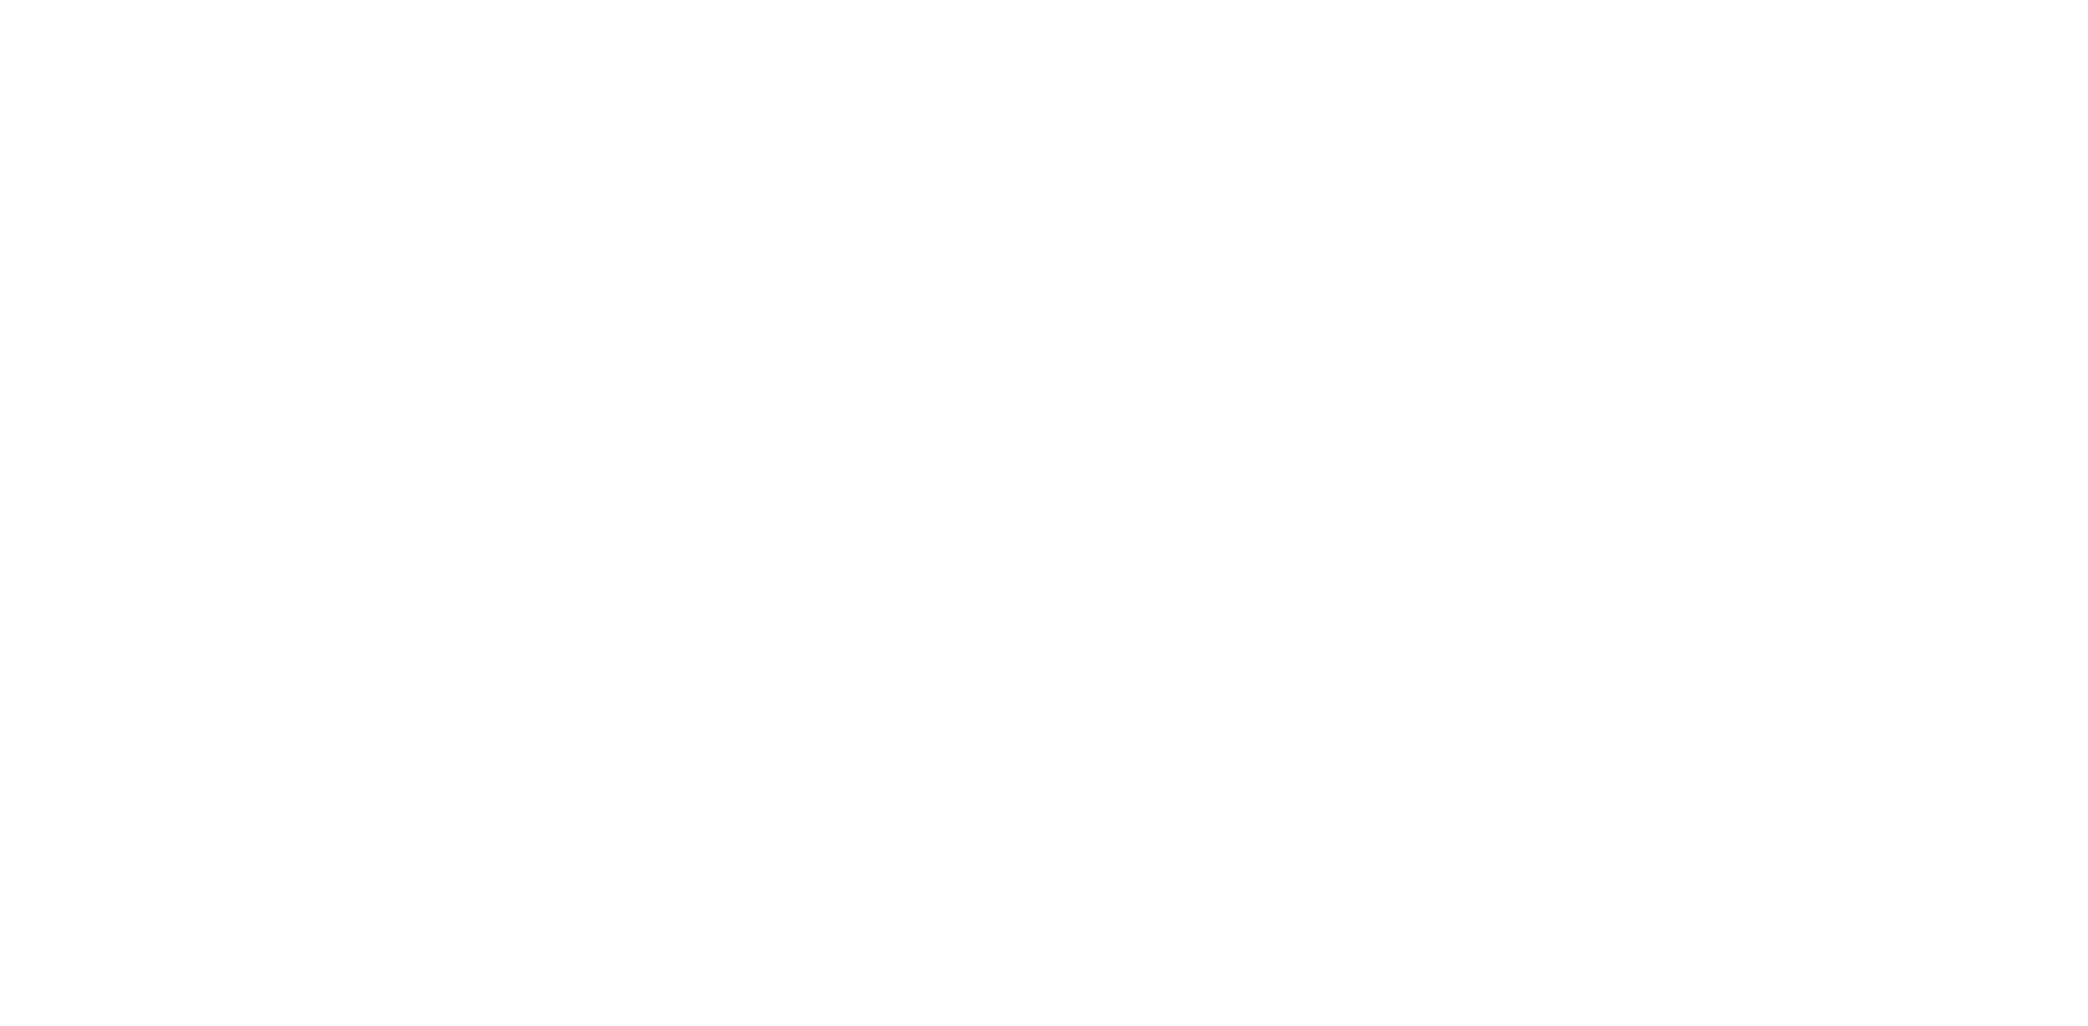 Berling